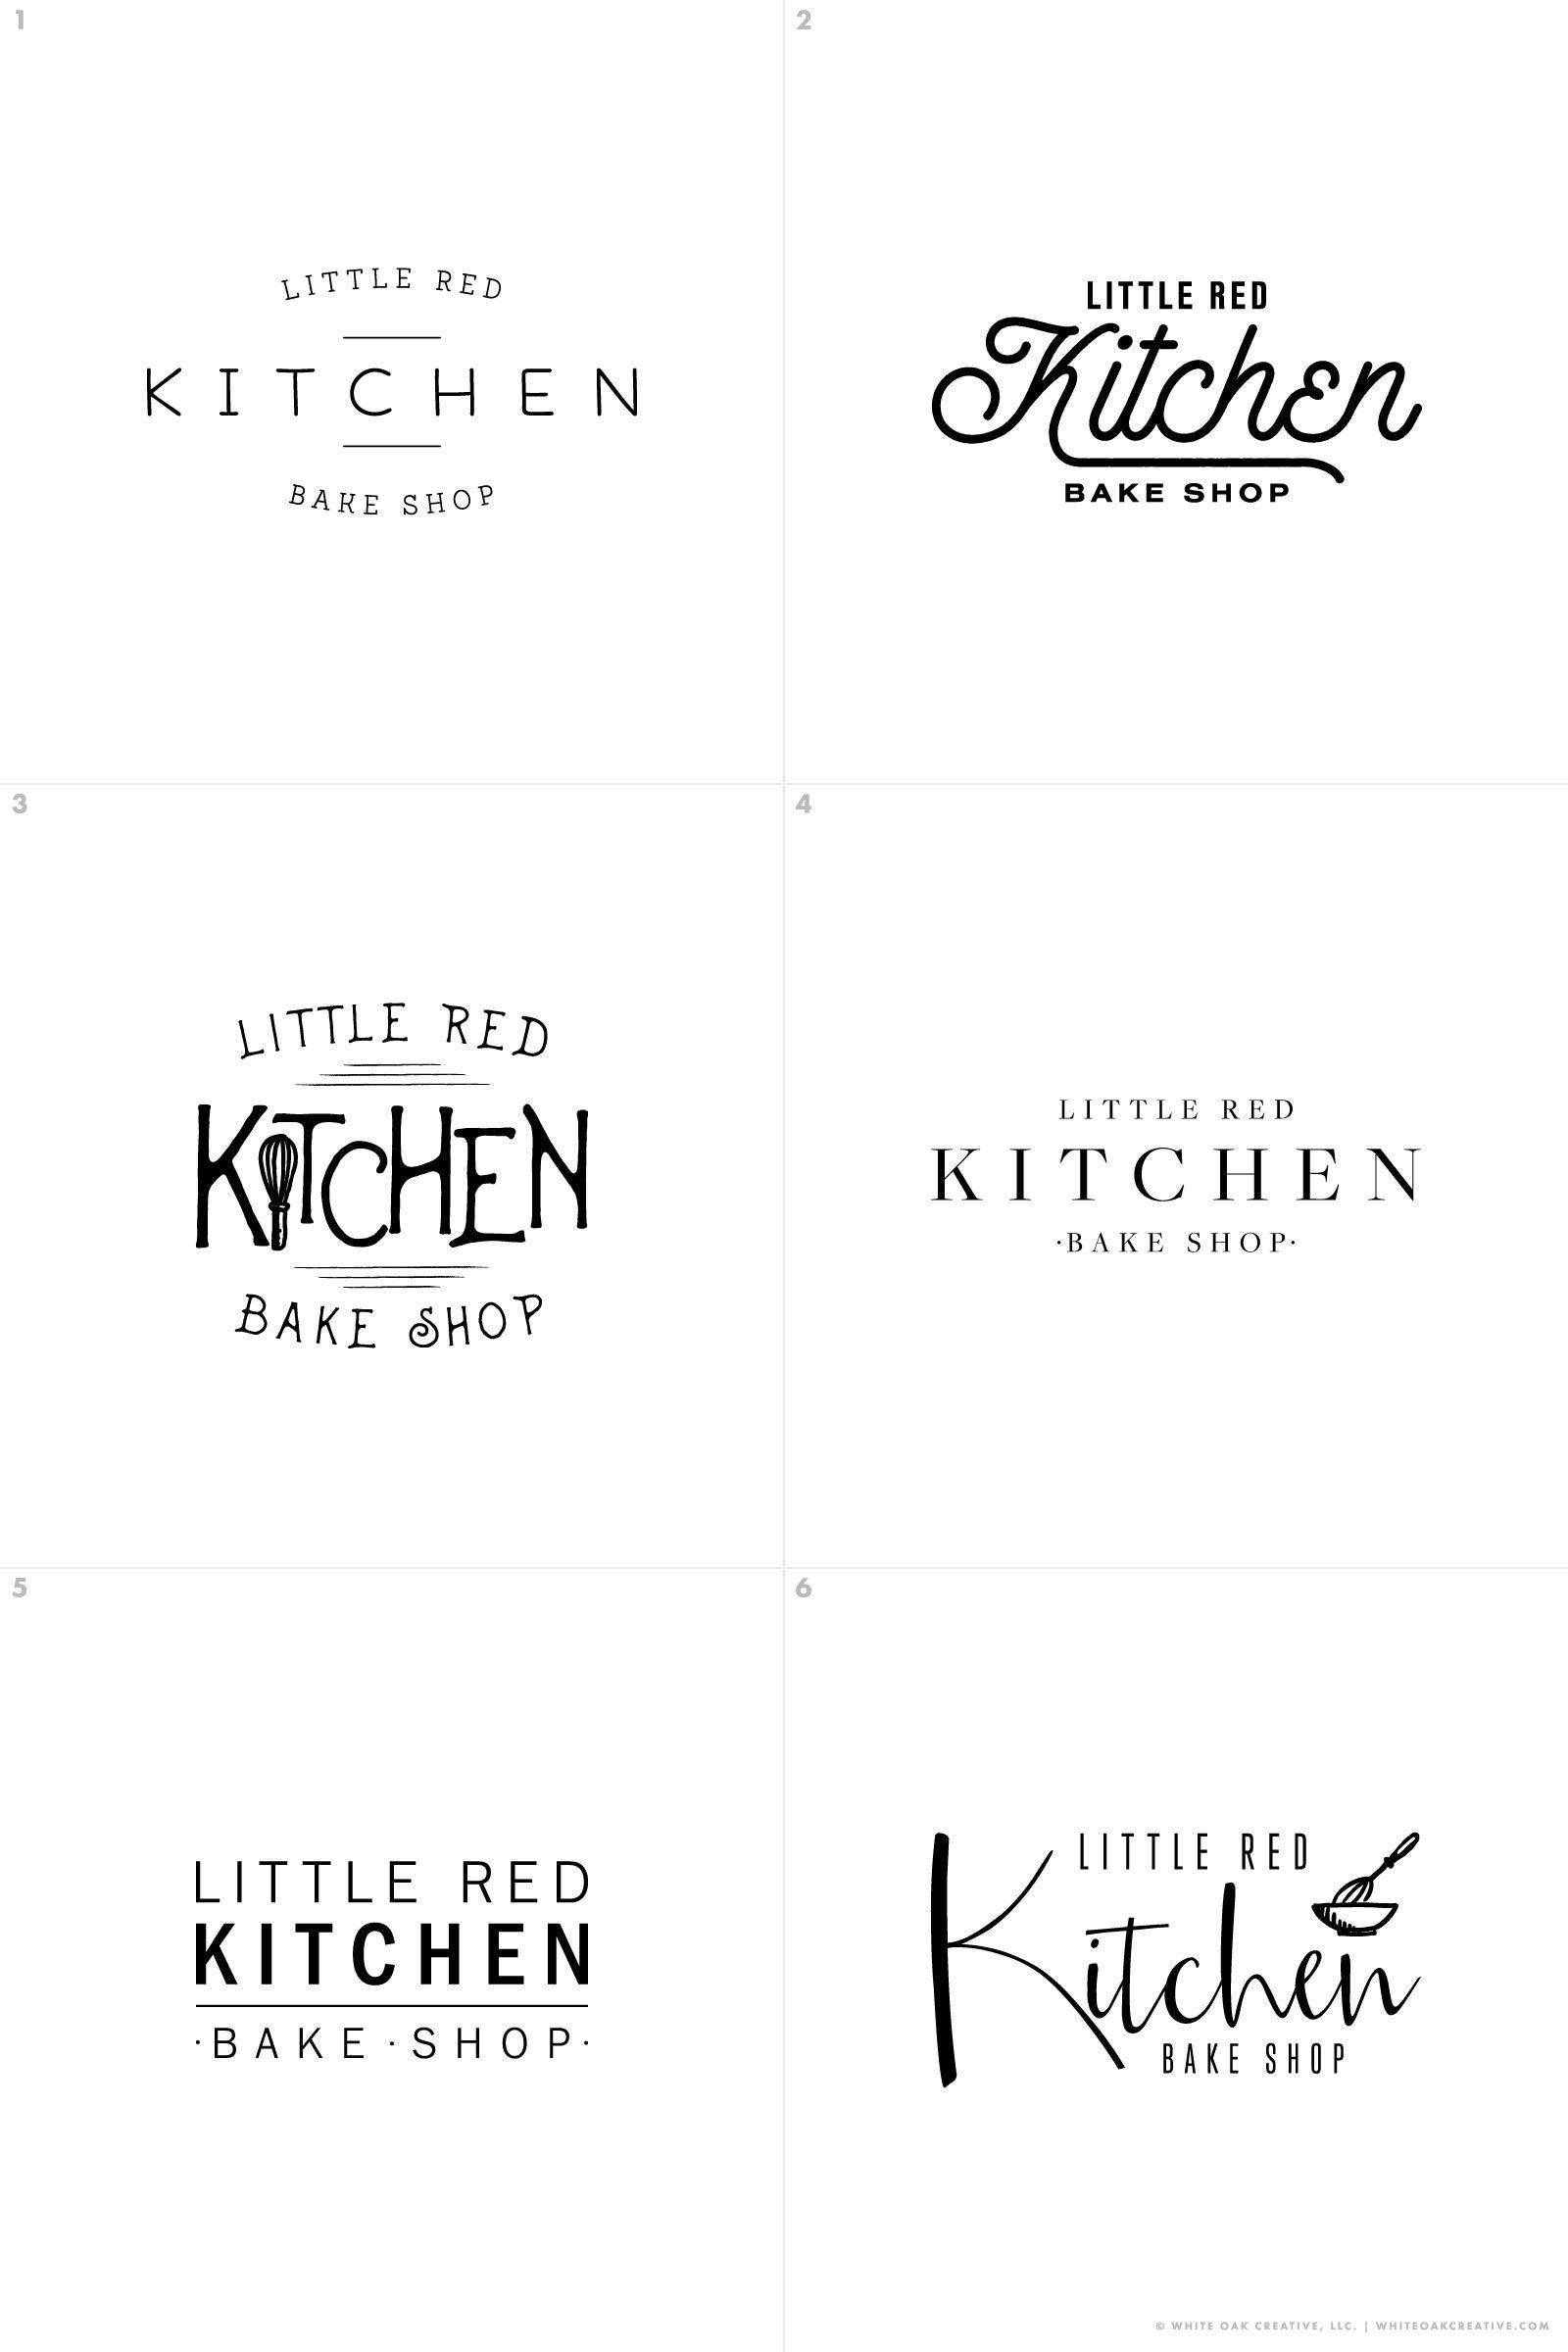 Red and White Food Logo - Little Red Kitchen Bake Shop | Typography | Pinterest | Logo design ...